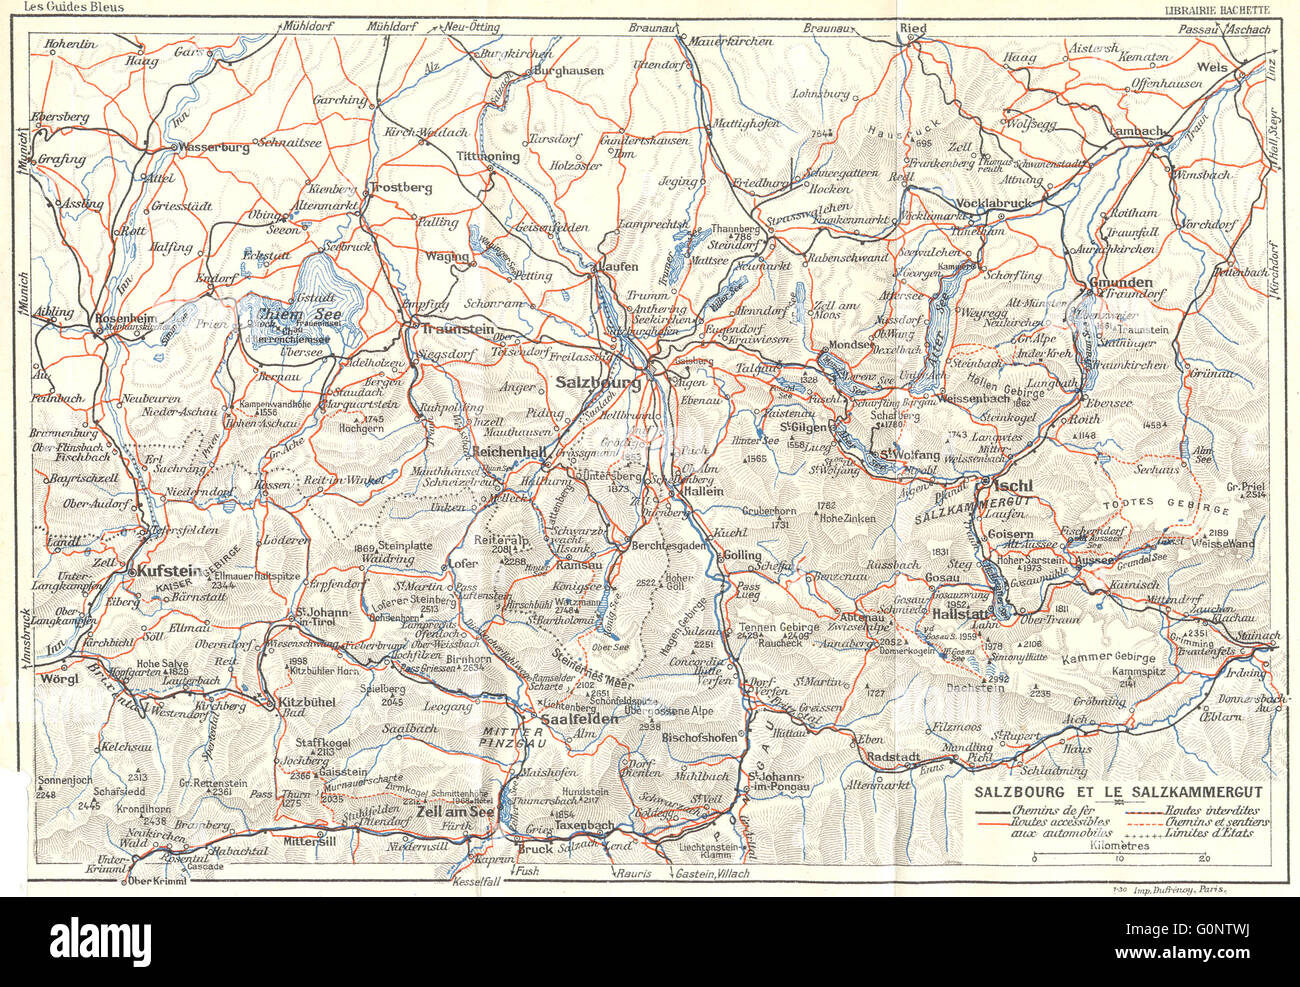 AUSTRIA: Salzburg Salzkammergut, 1914 antique map Stock Photo